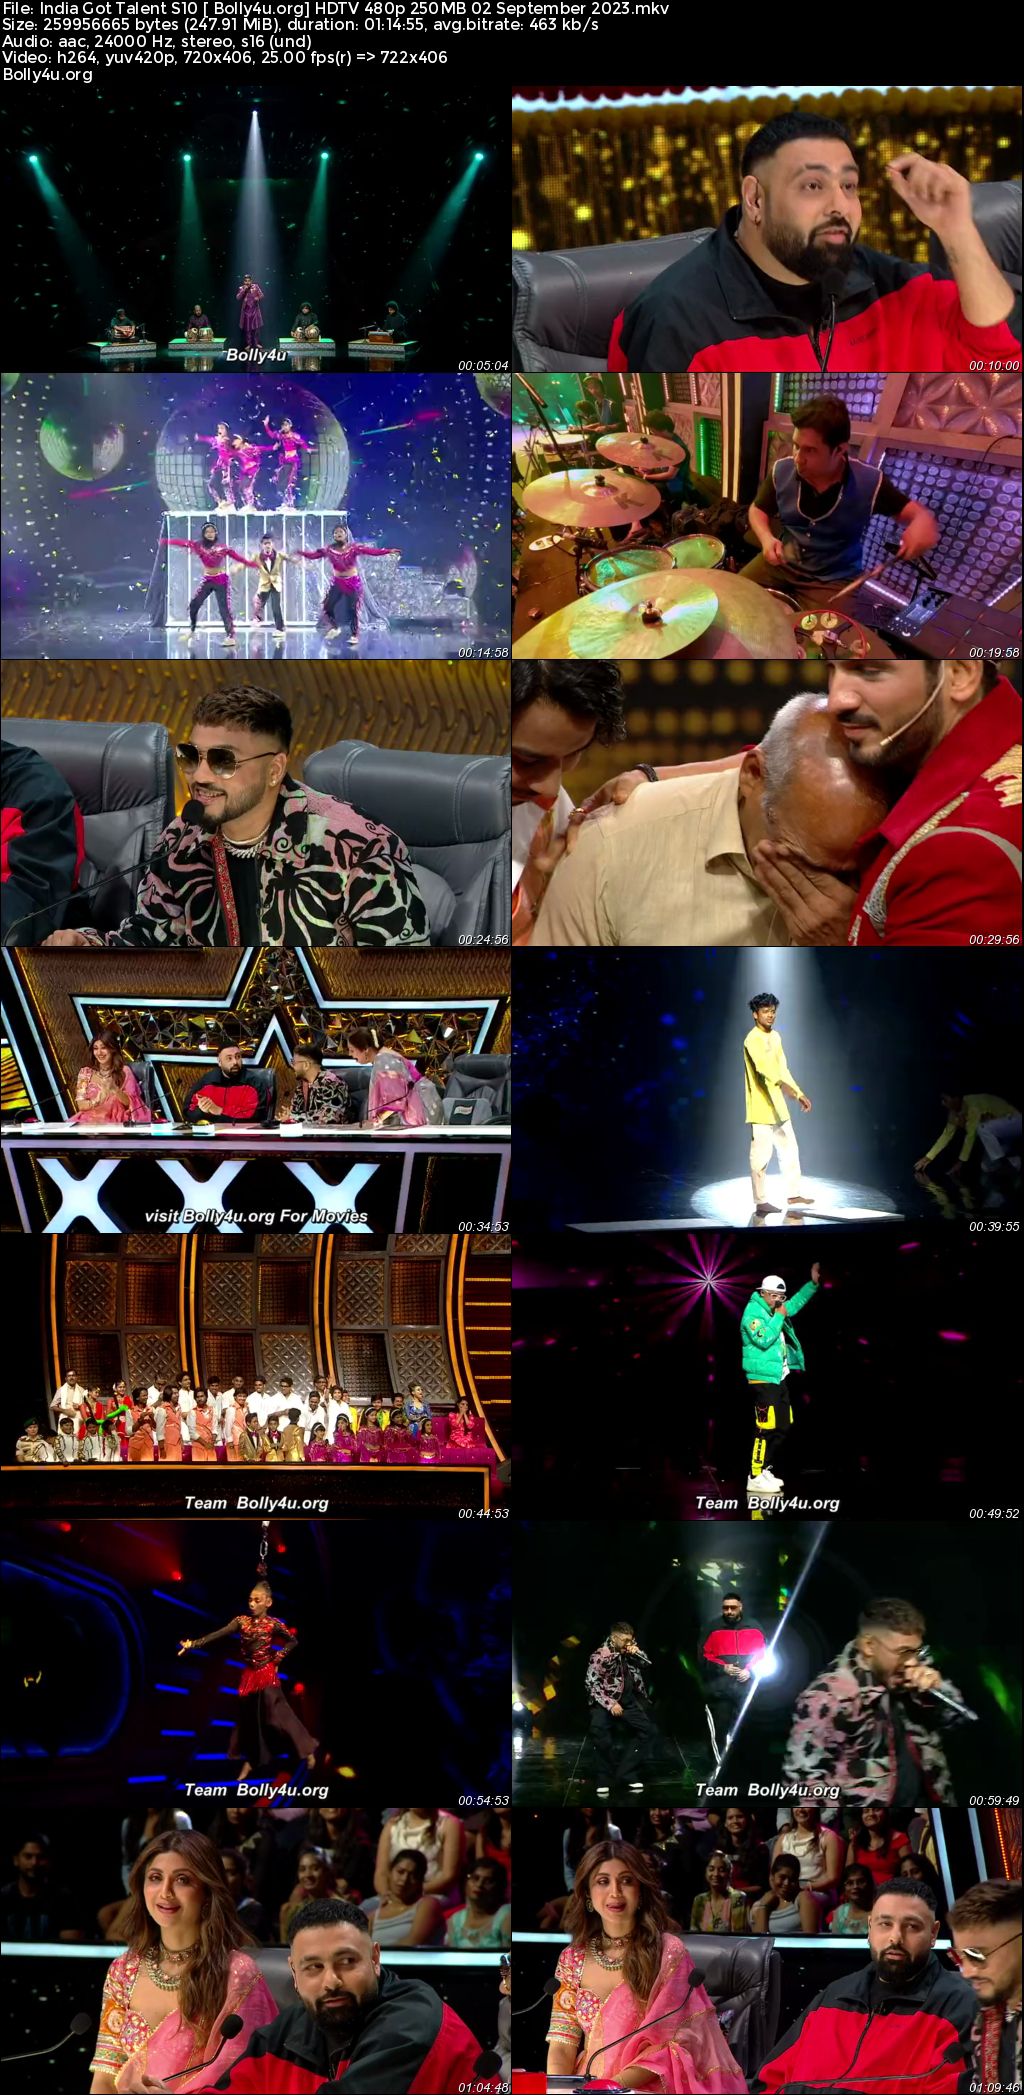 India Got Talent S10 HDTV 480p 250MB 02 September 2023 Download